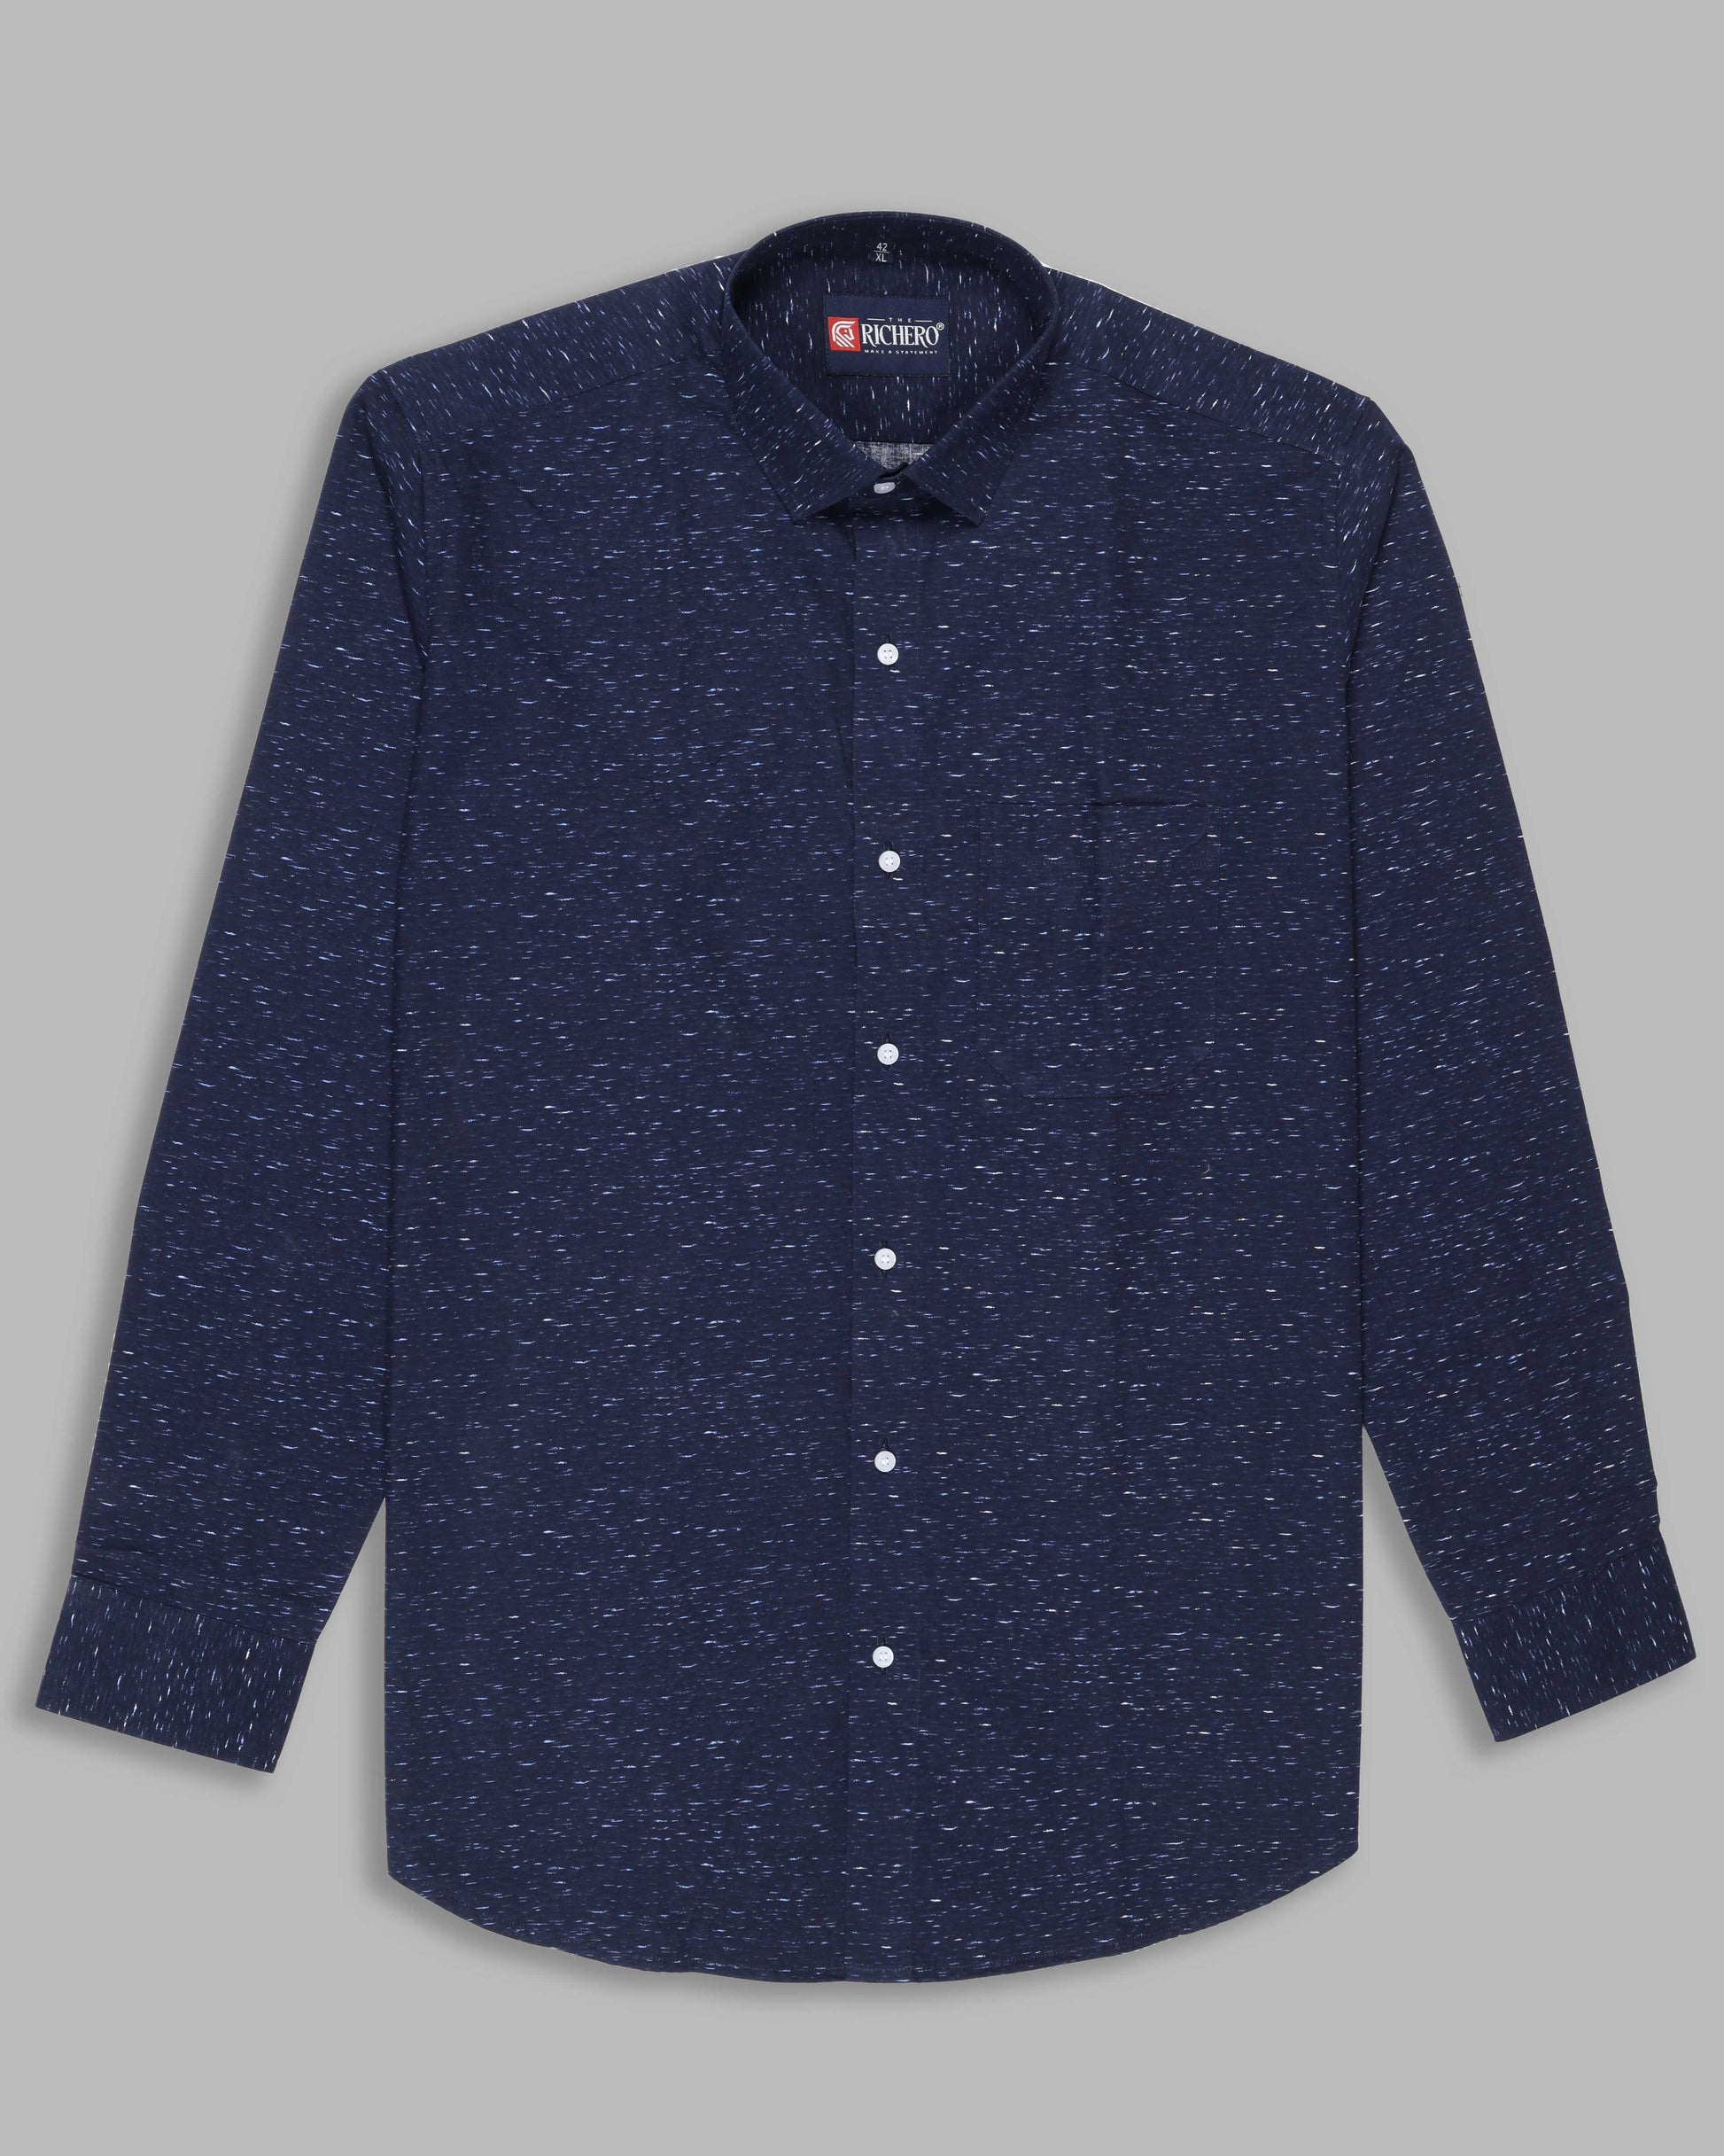  100% cotton navy blue printed fabric Shirt